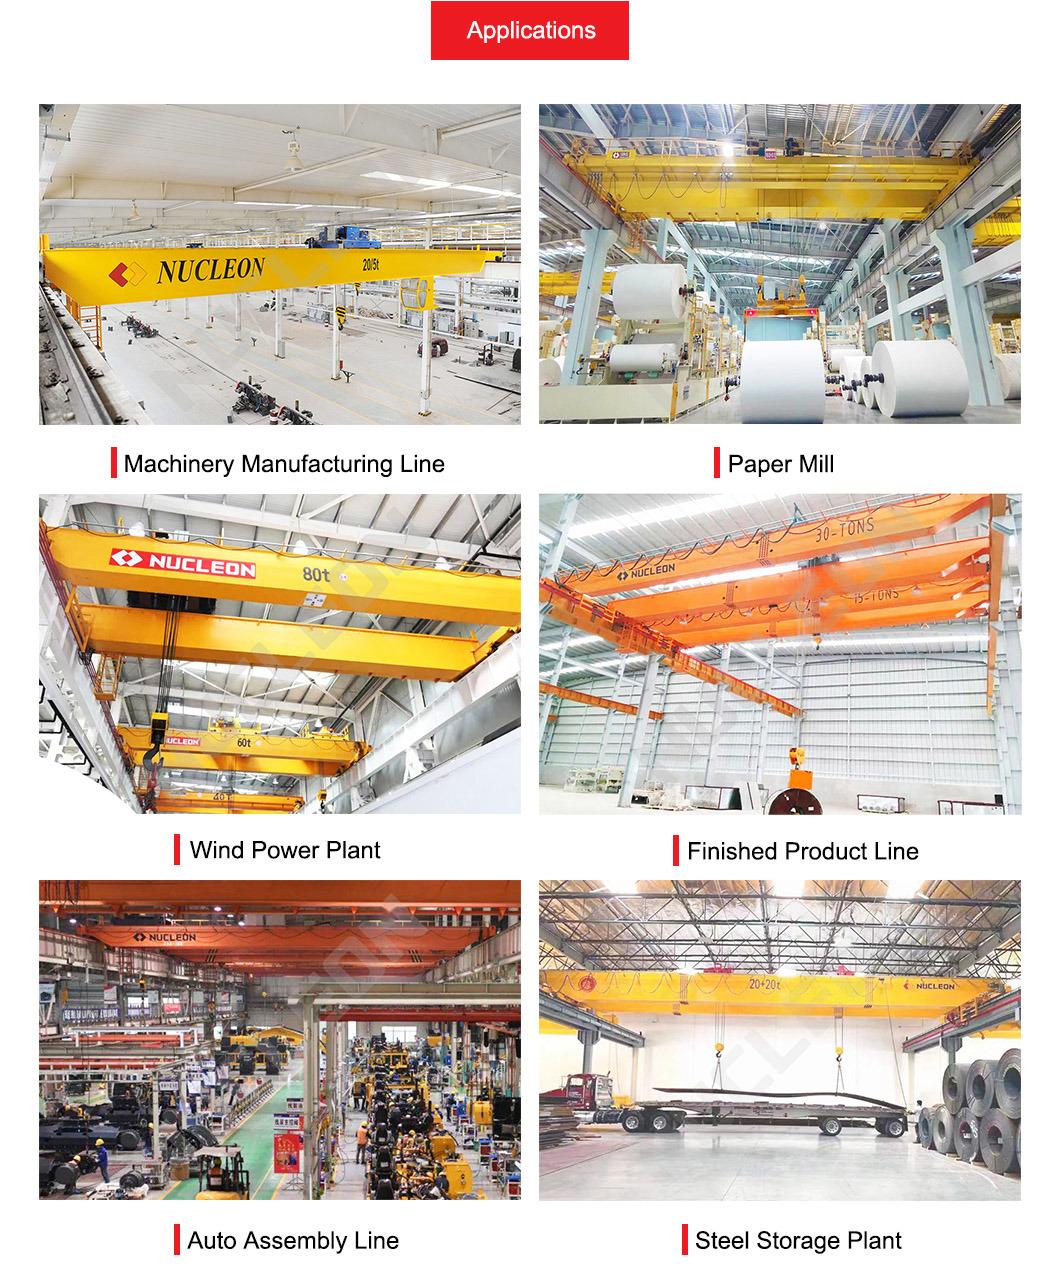 CE Certified Industrial 5t Double Girder Bridge Crane for Maintenance Workshop